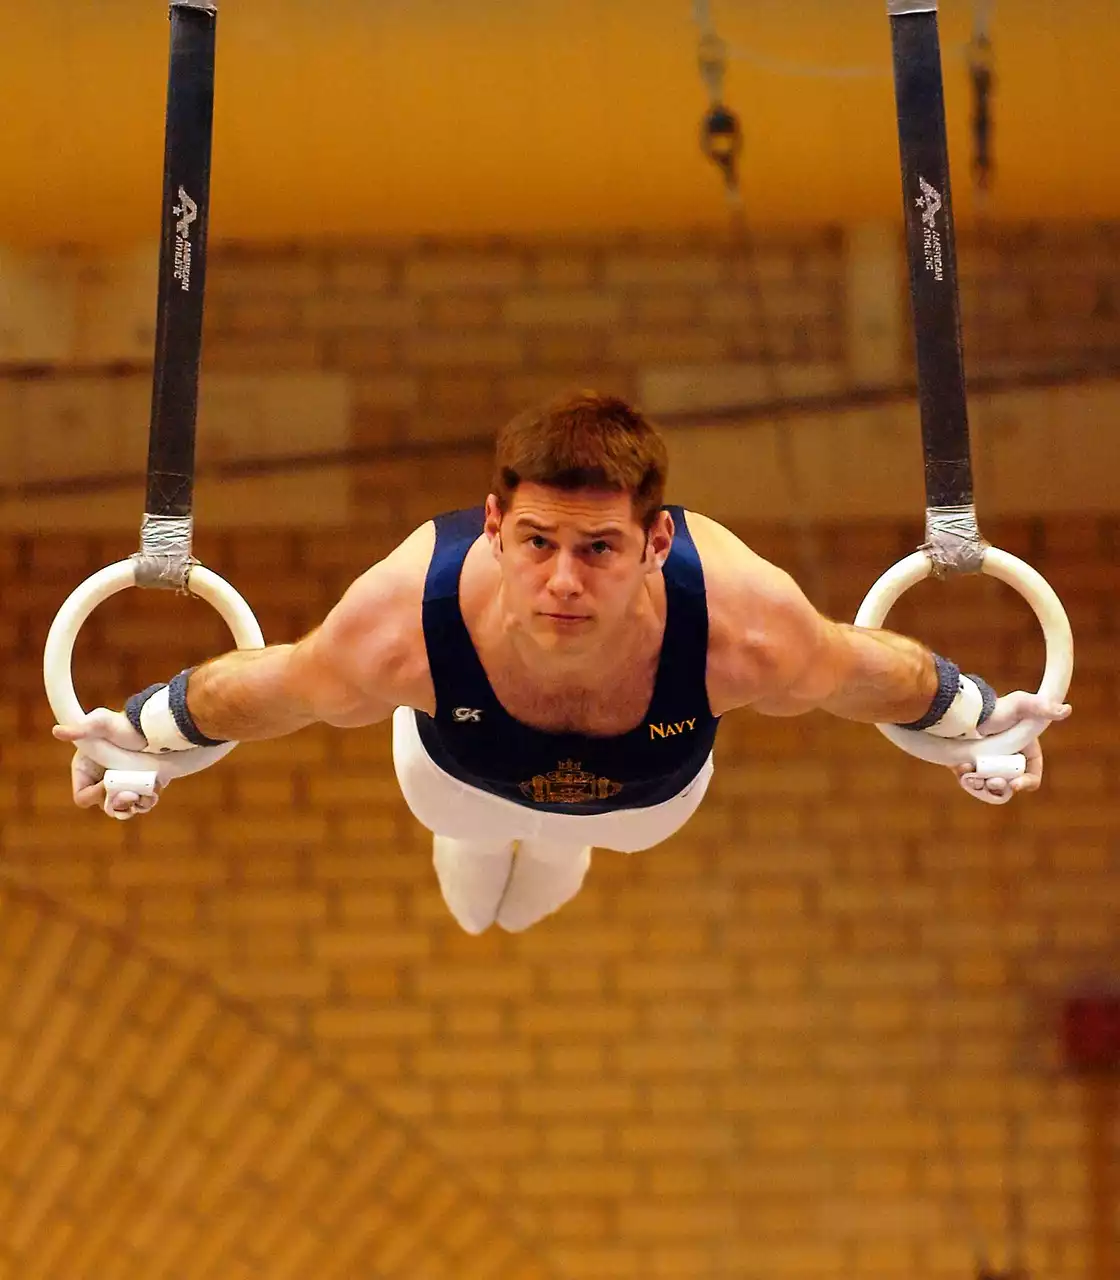 Understanding Progressions in Gymnastics Training